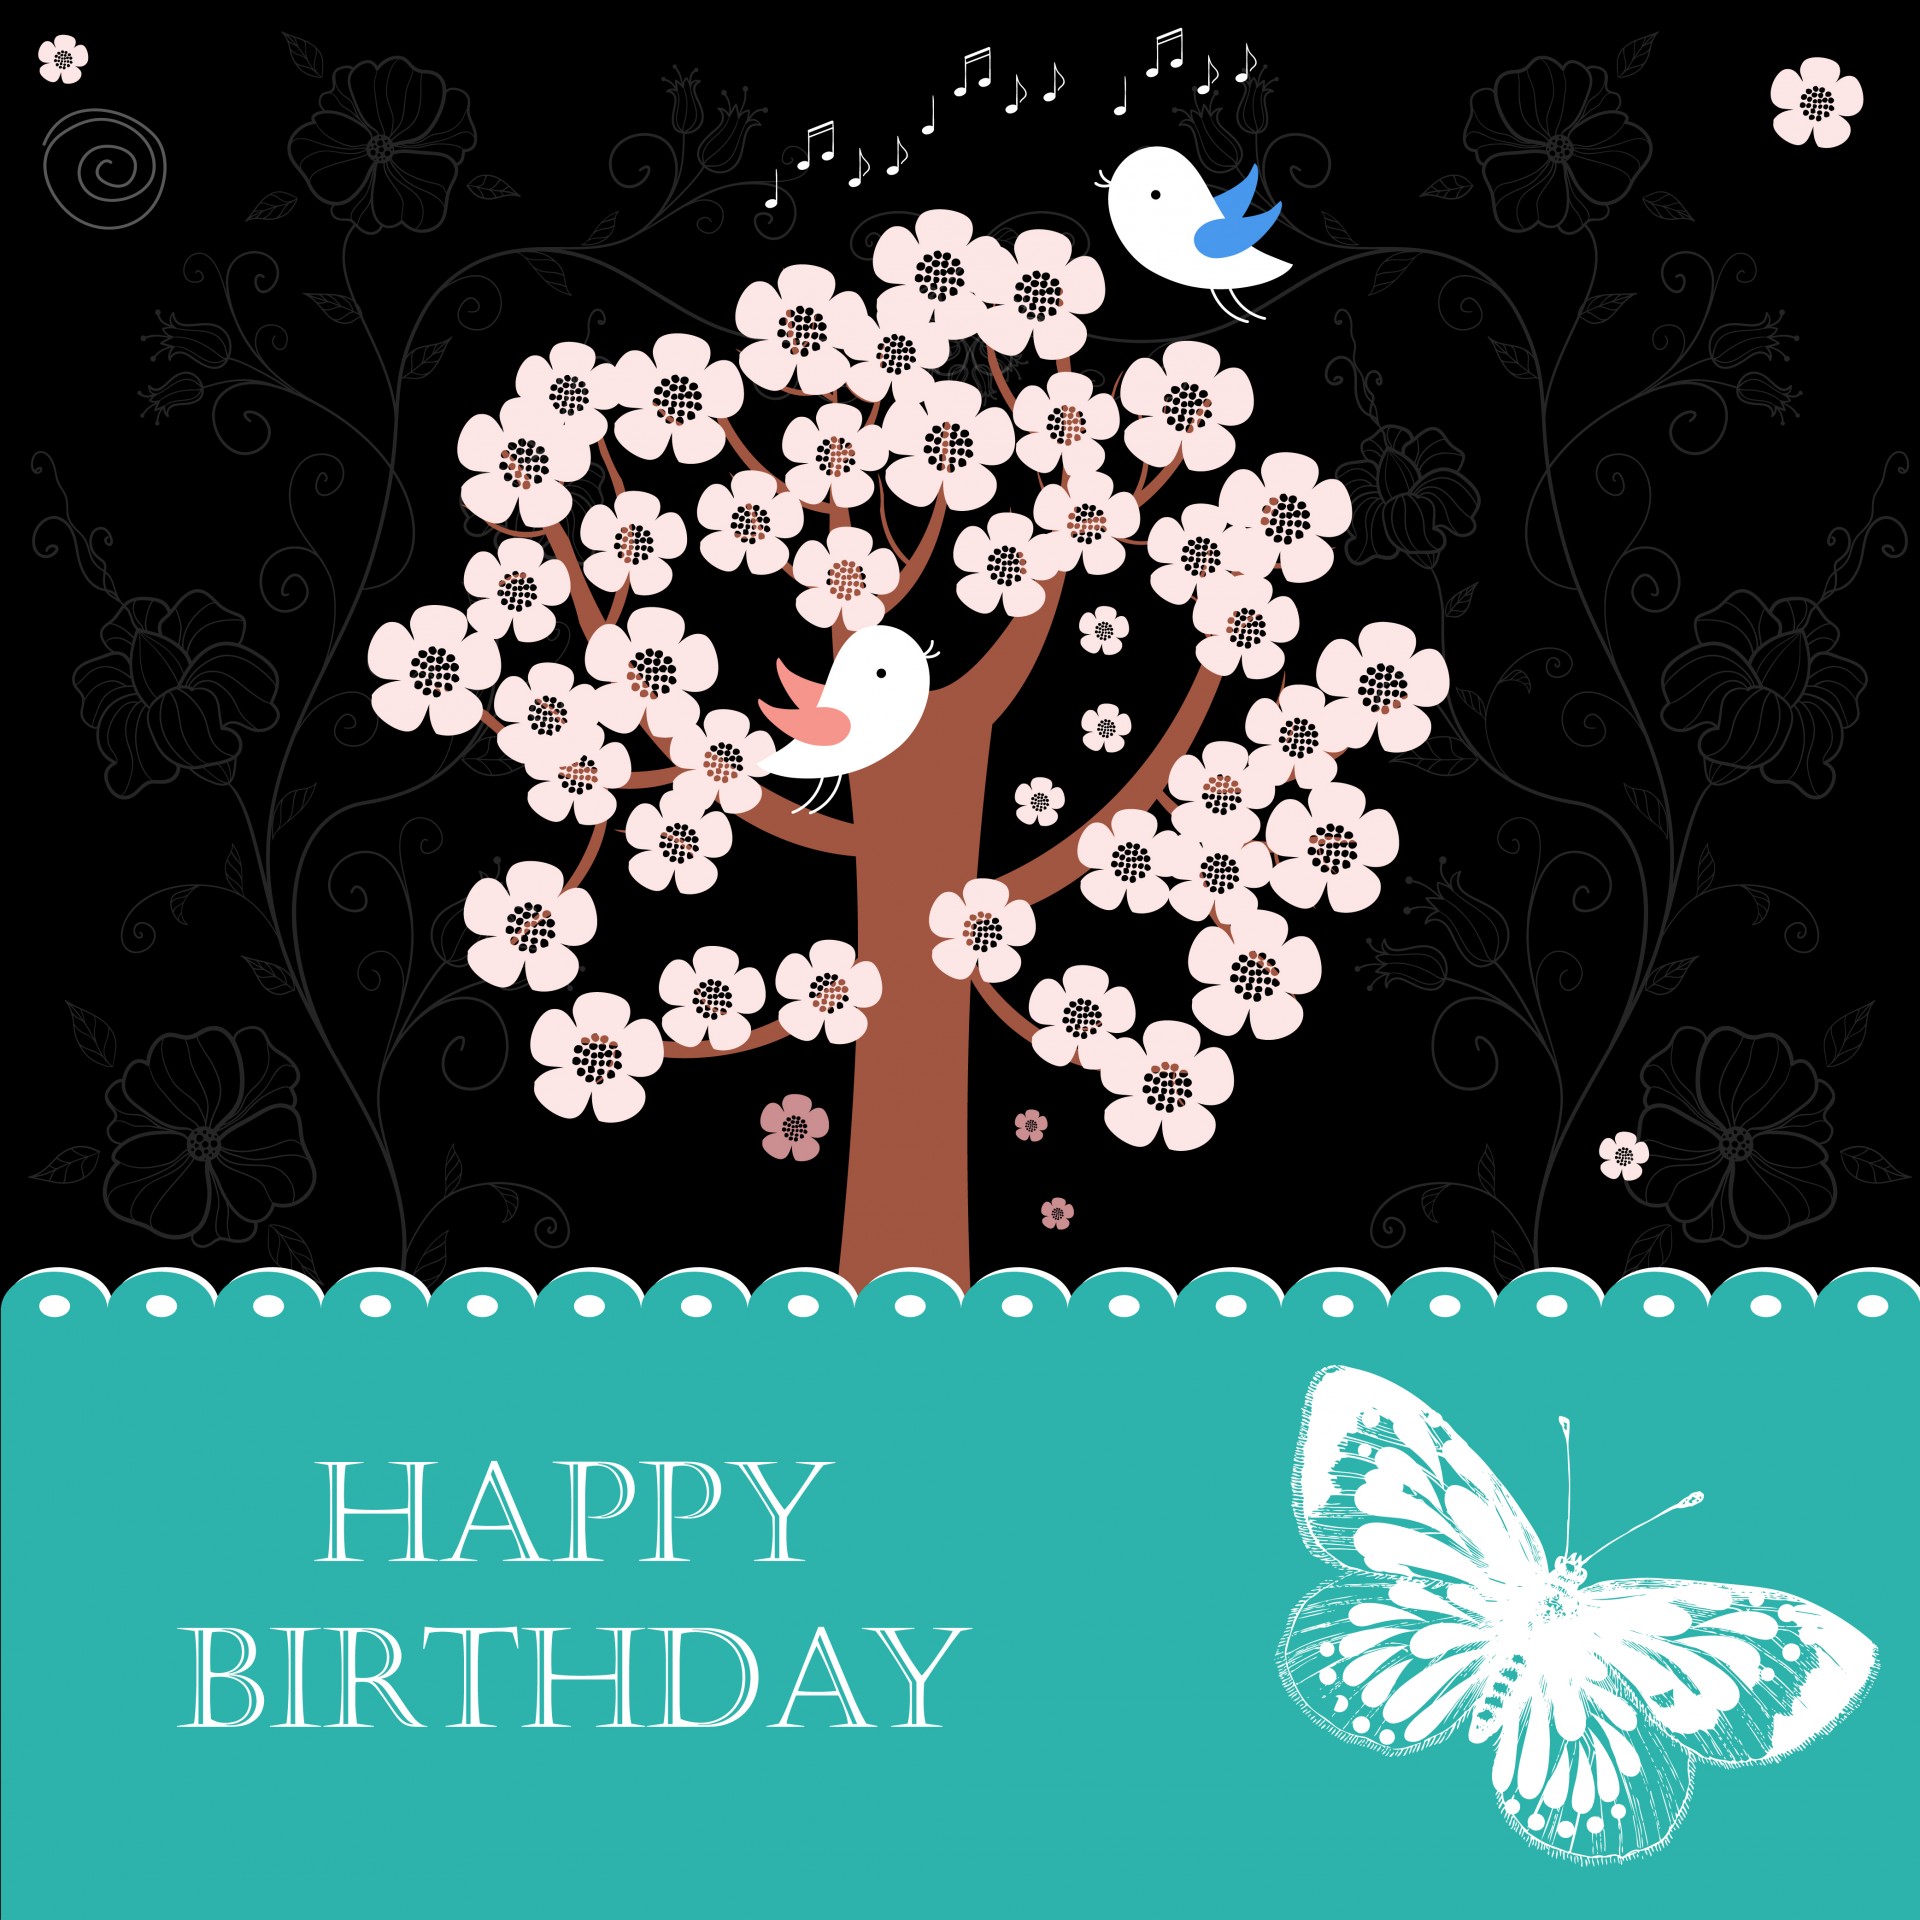 Cute flowers and birds whimsical birthday card